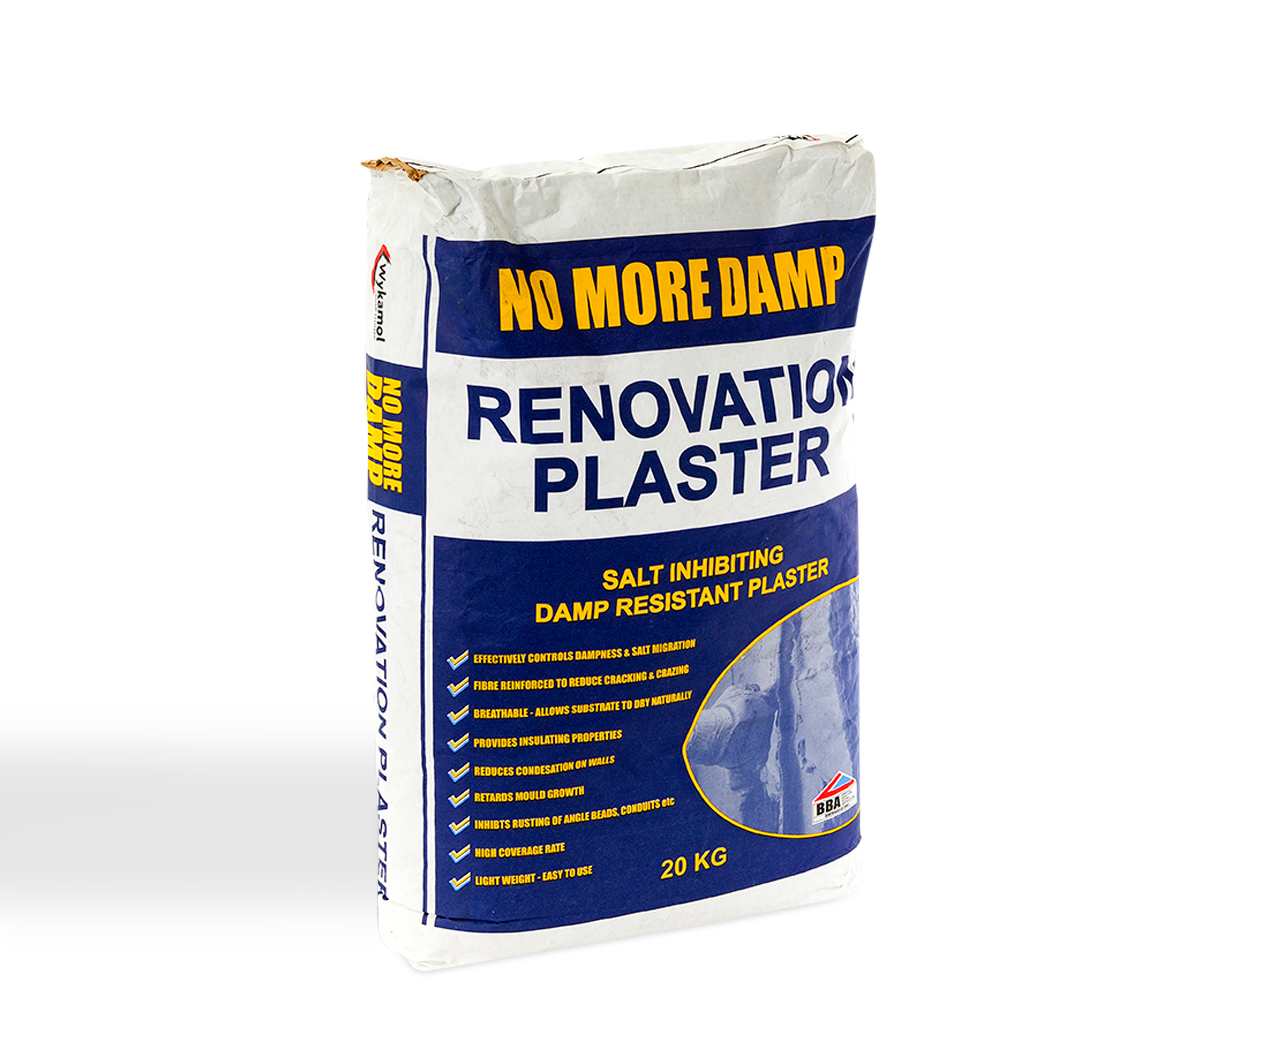 Anti damp plaster